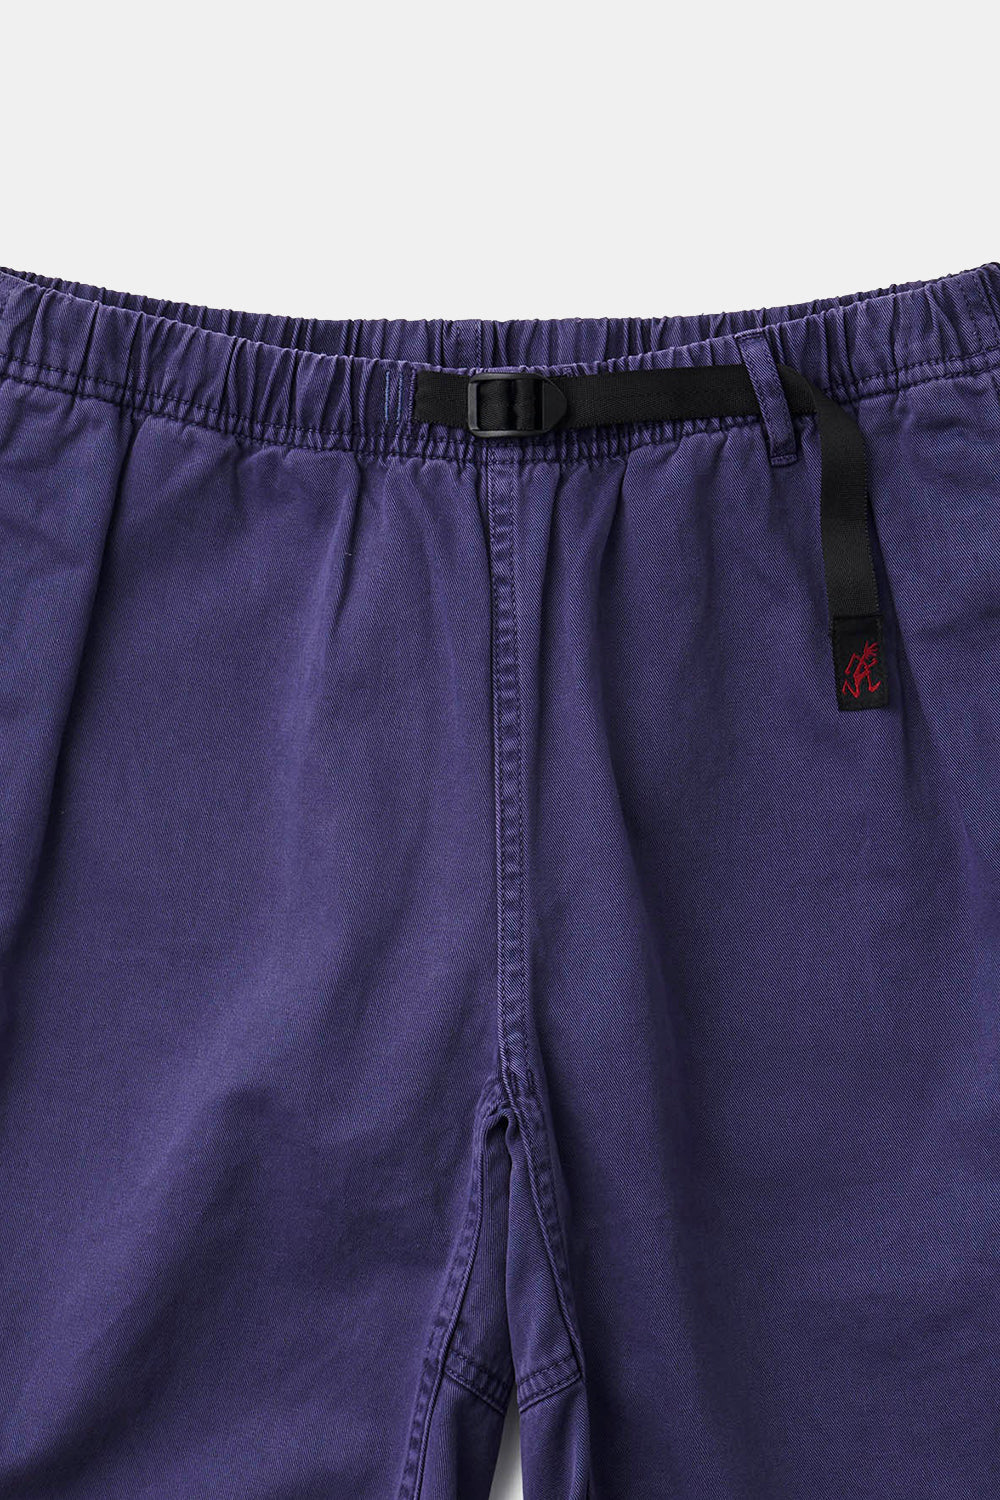 Gramicci G-Shorts Pigment Dye Cotton Twill (Grey Purple)